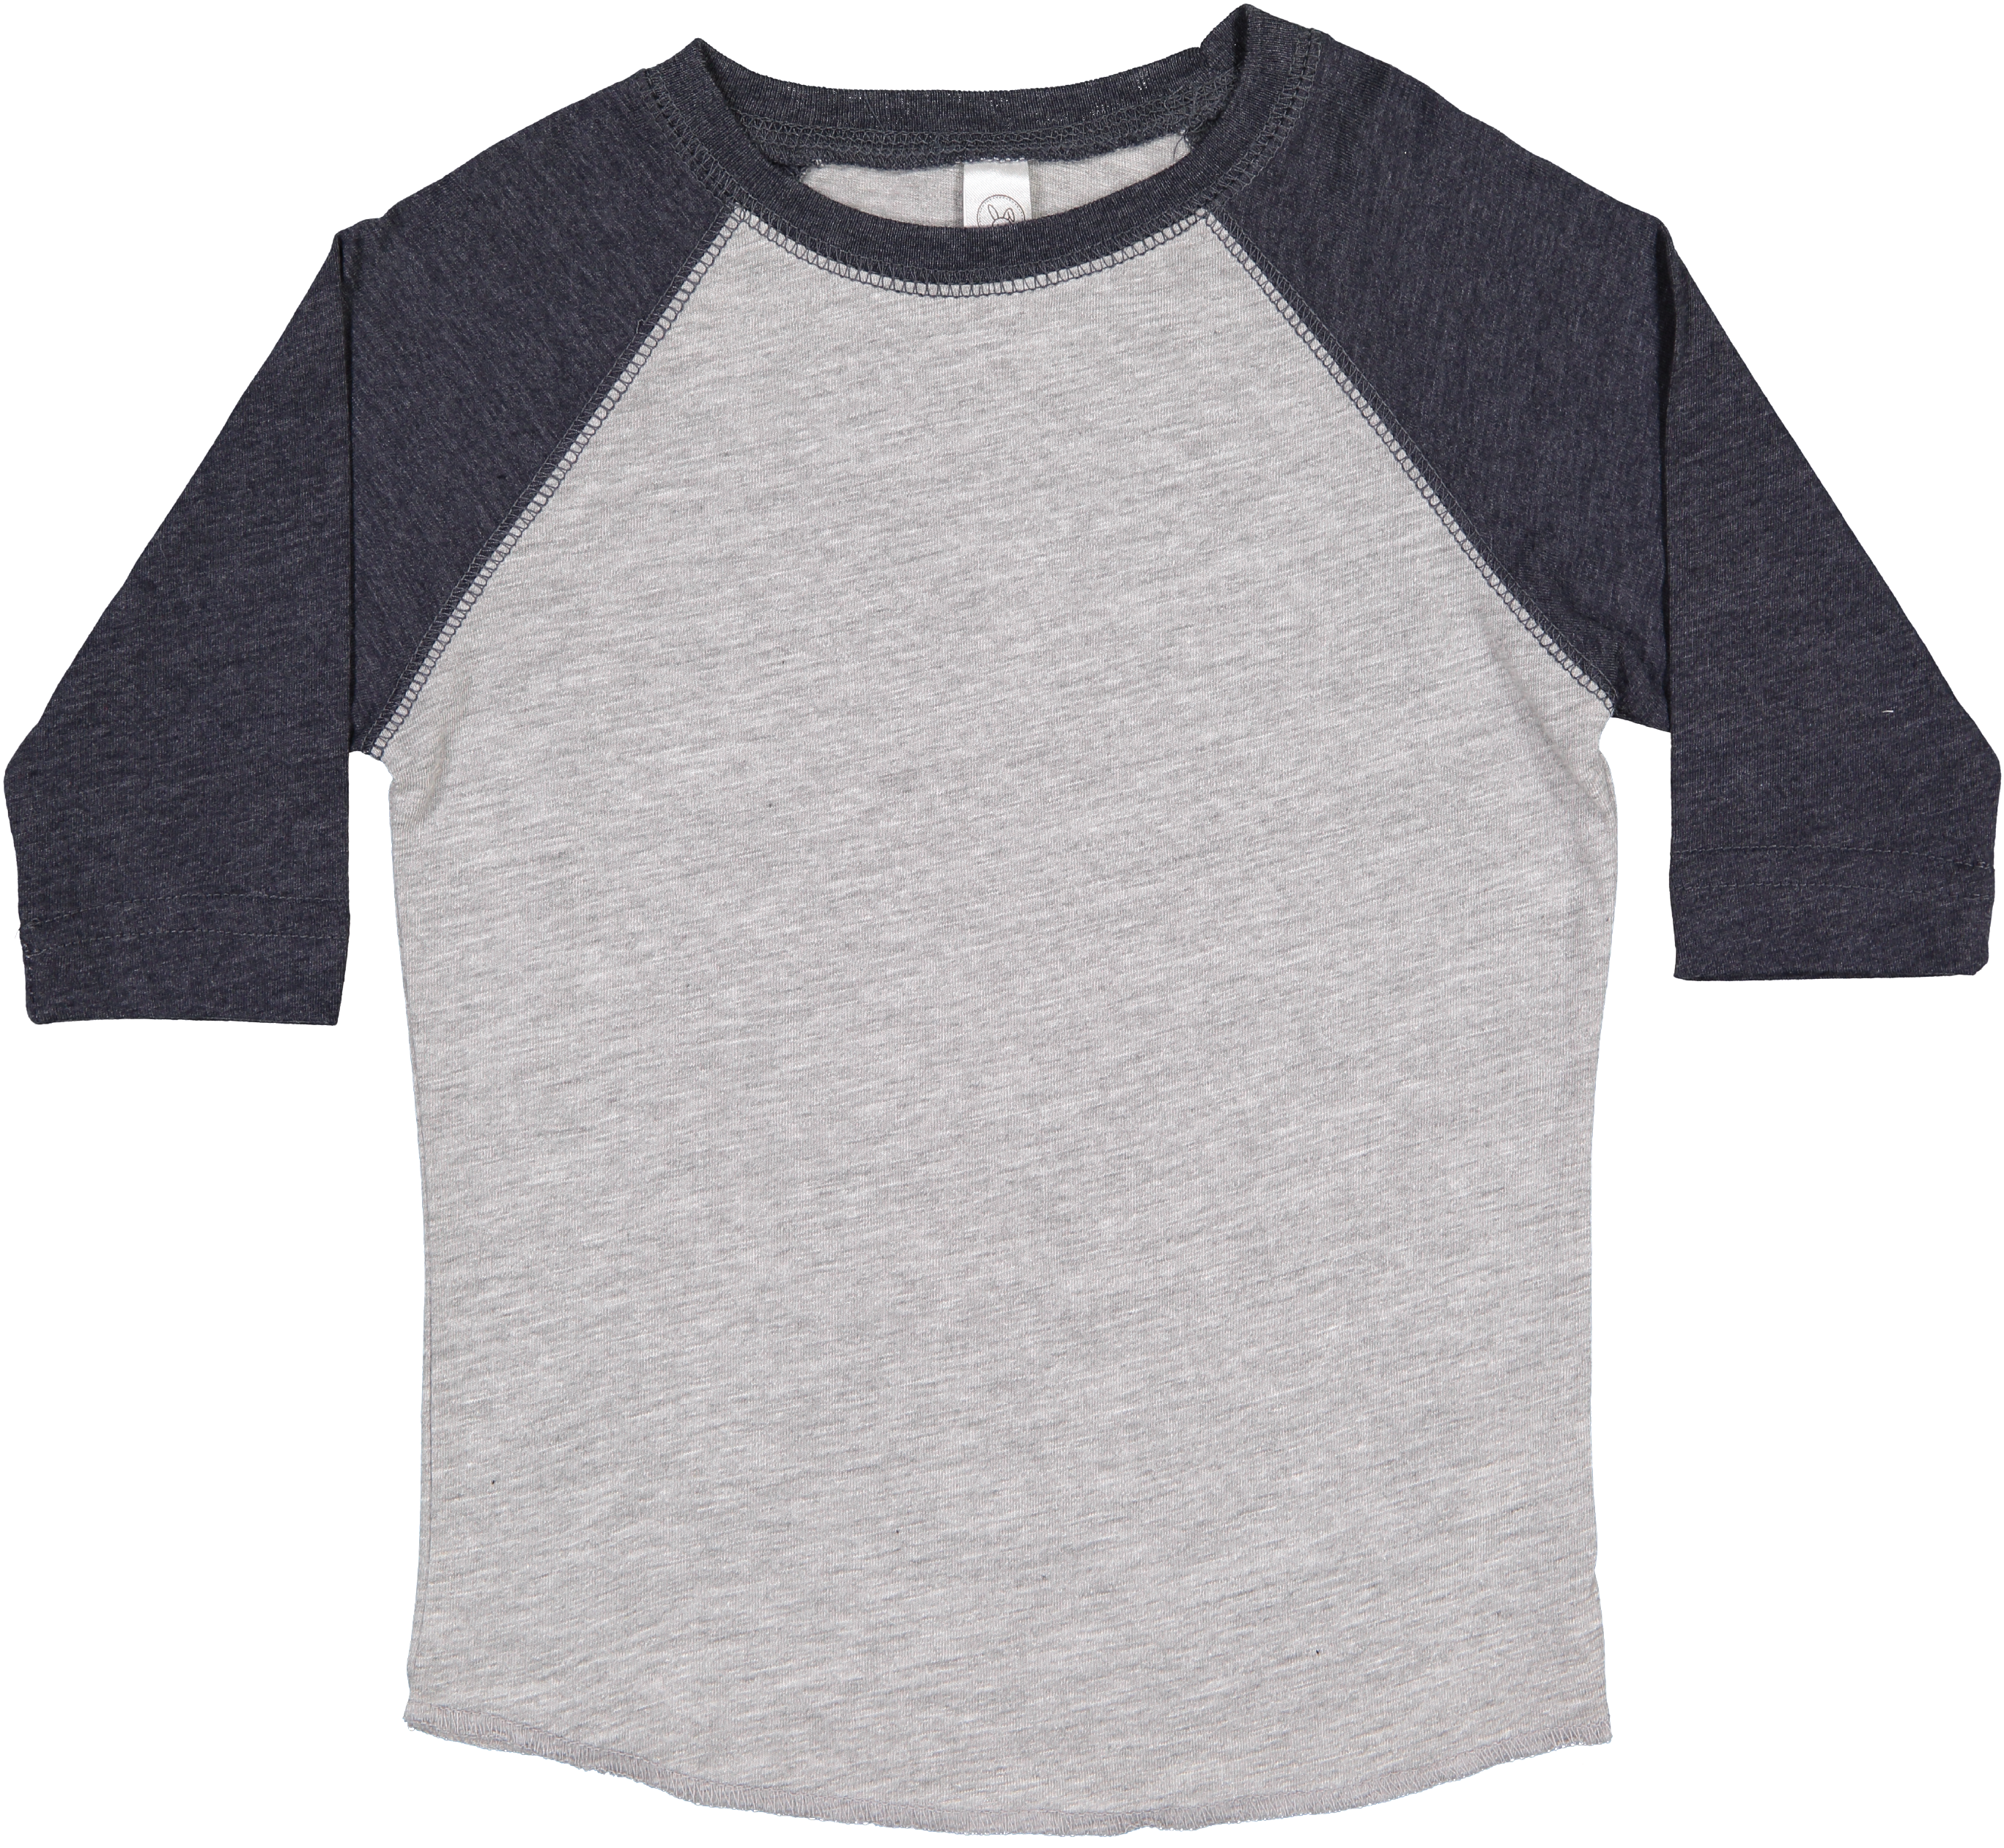 Toddler (Unisex) Raglan Baseball T-Shirt  (Vintage Heather / Vintage Navy)